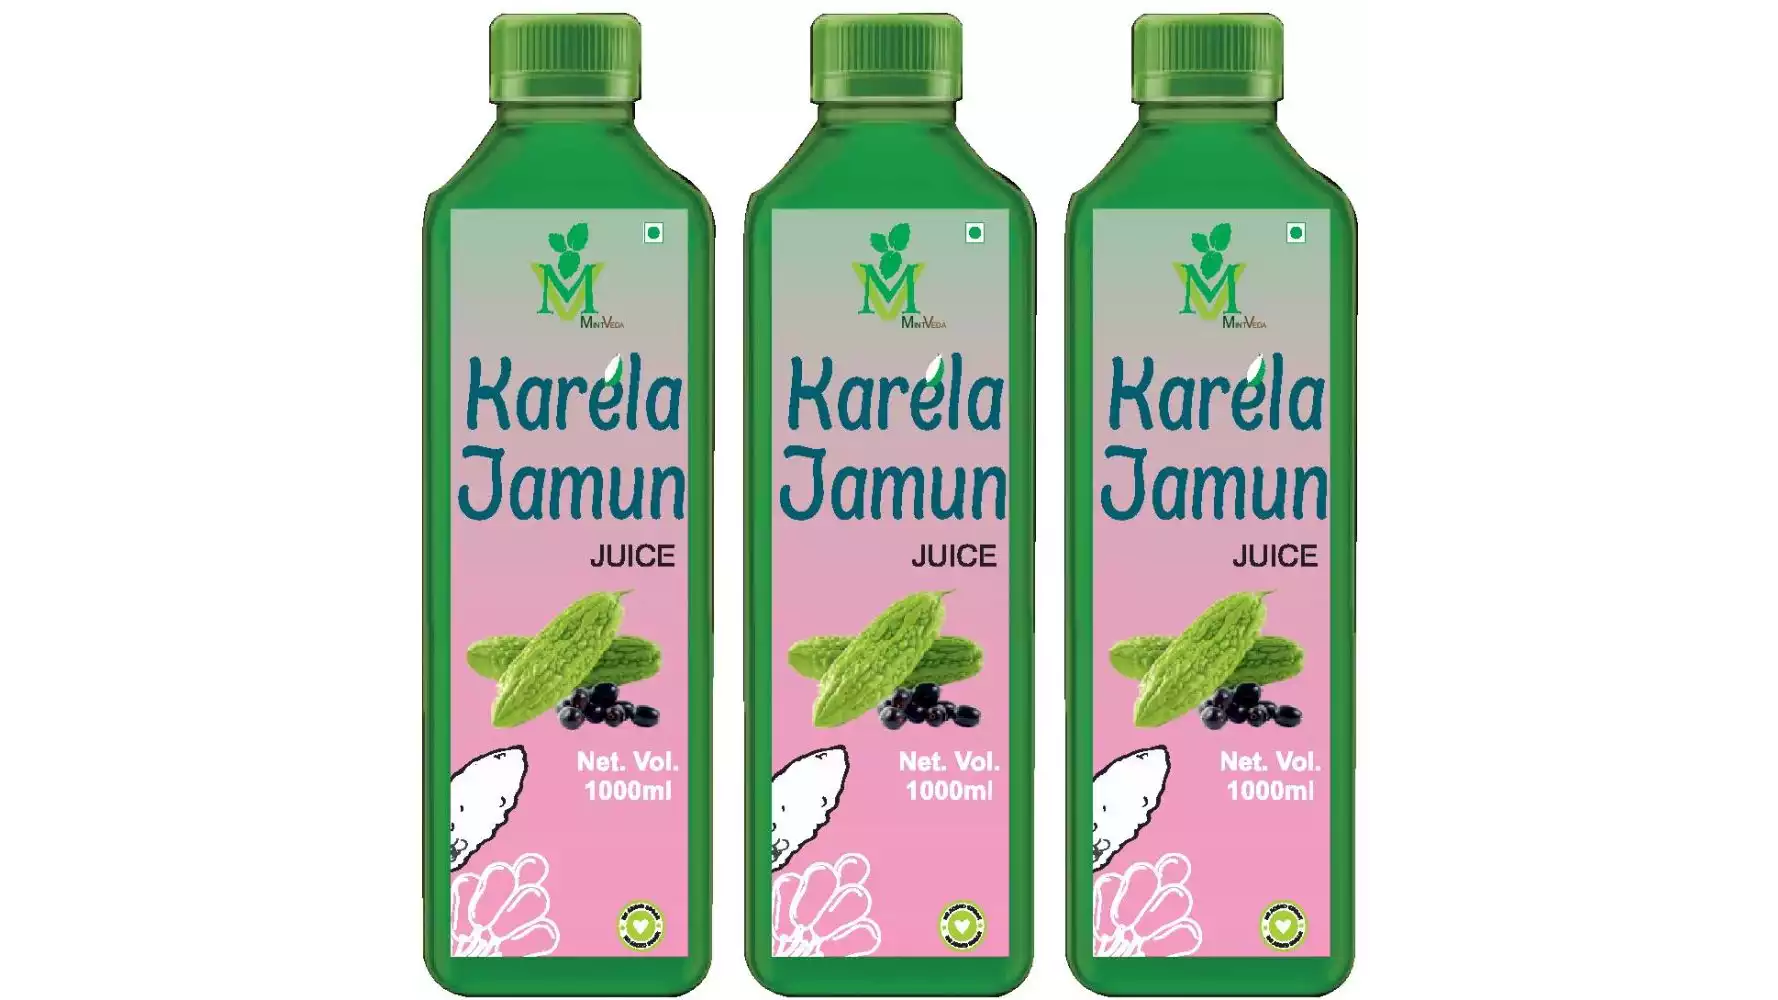 Mint Veda Karela Jamun (Sugar Free) Juice (1liter, Pack of 3)